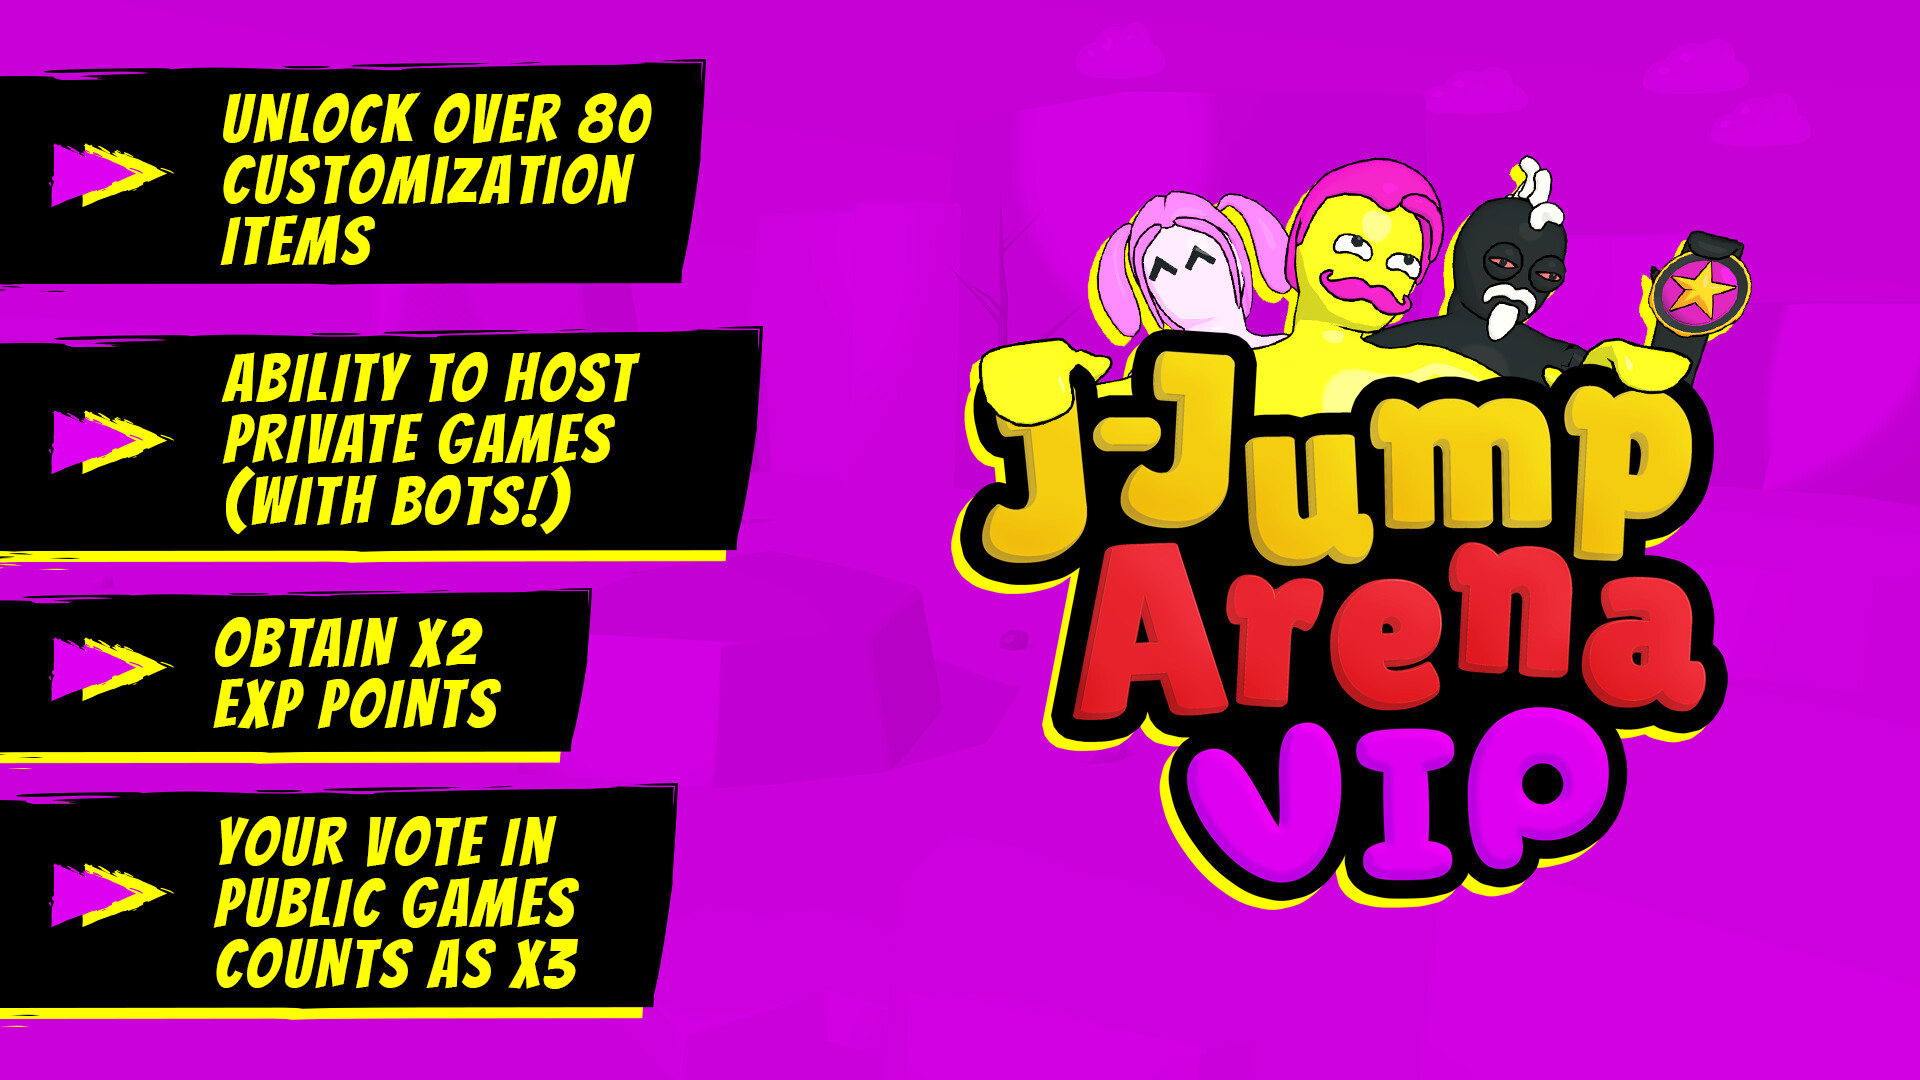 [$ 3.38] J-Jump Arena - VIP Upgrade DLC Steam CD Key